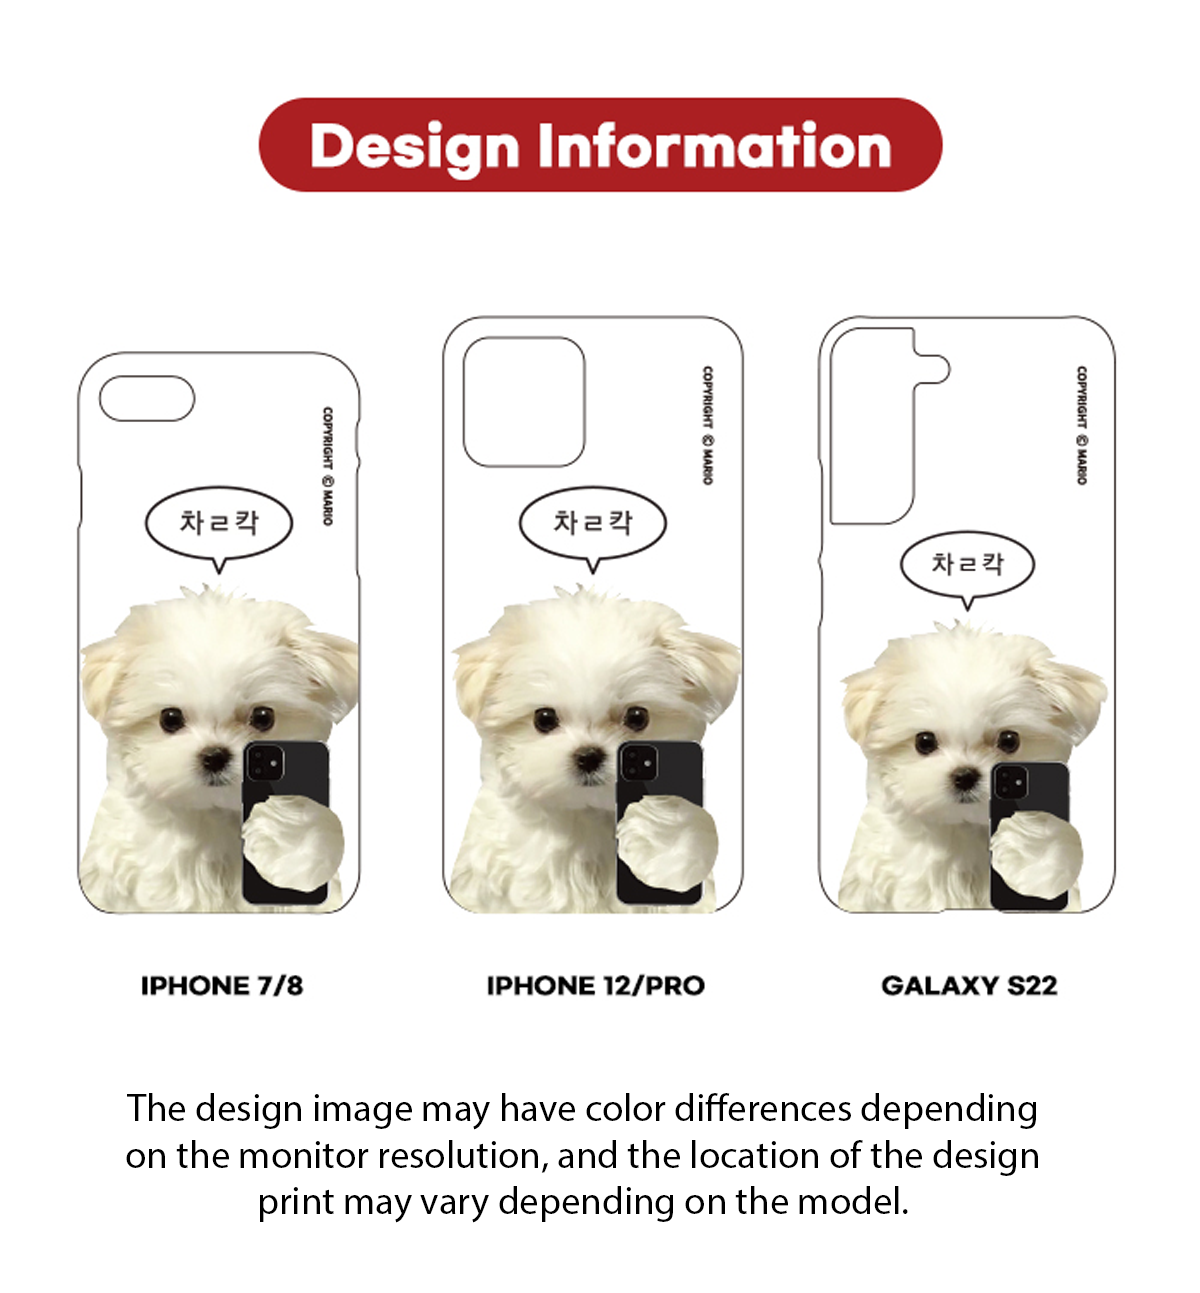 Doggy Snap! Phone Case [Jelly]